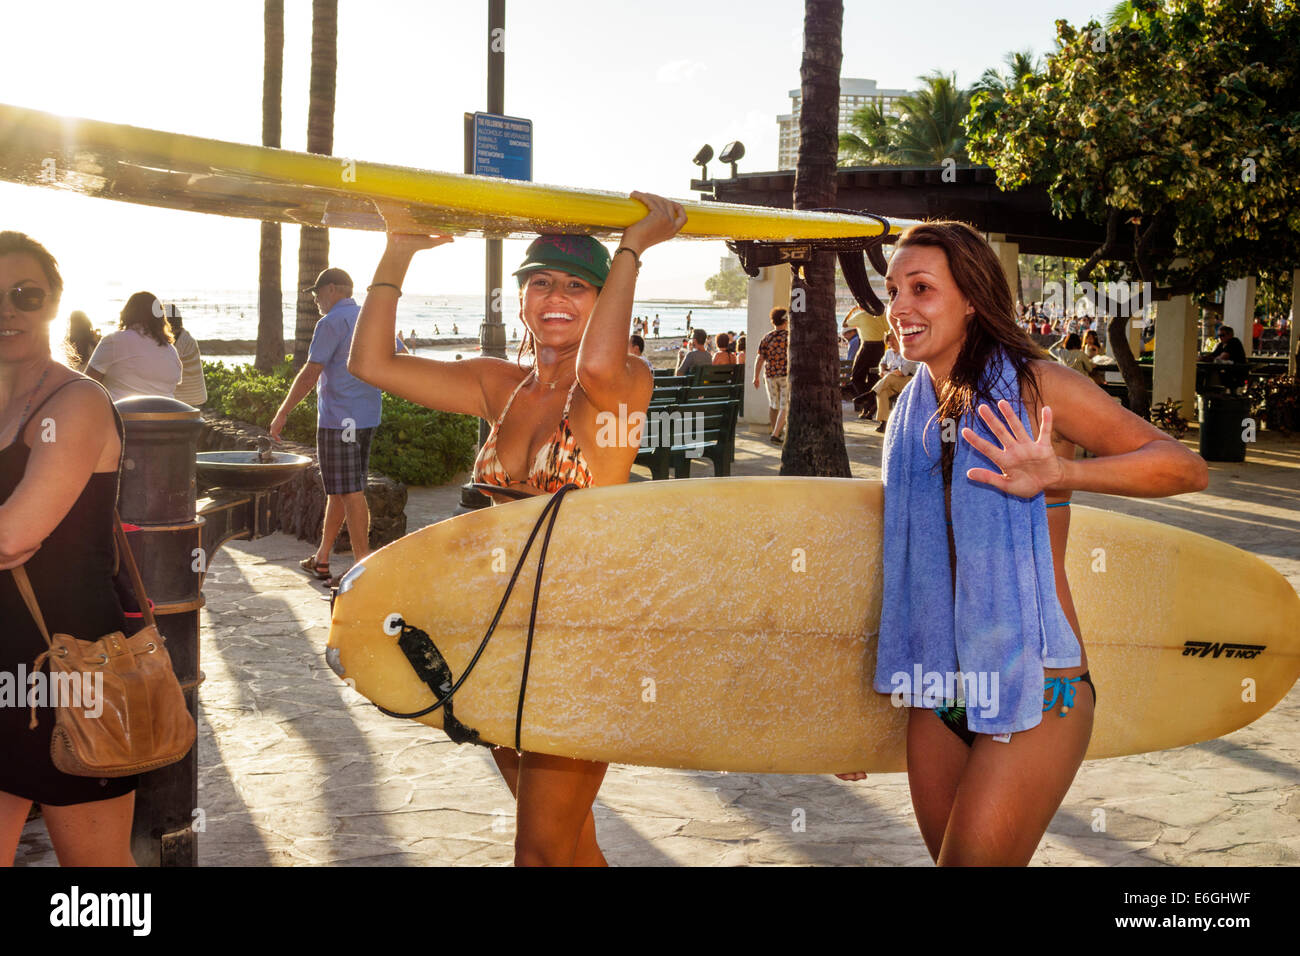 Hawaii,Hawaiian,Honolulu,Waikiki Beach,Kalakaua Avenue,Kuhio Beach Park,adultos mujeres mujeres mujeres mujeres mujeres dama,amigos,surfista,llevando tabla de surf,visitante Foto de stock